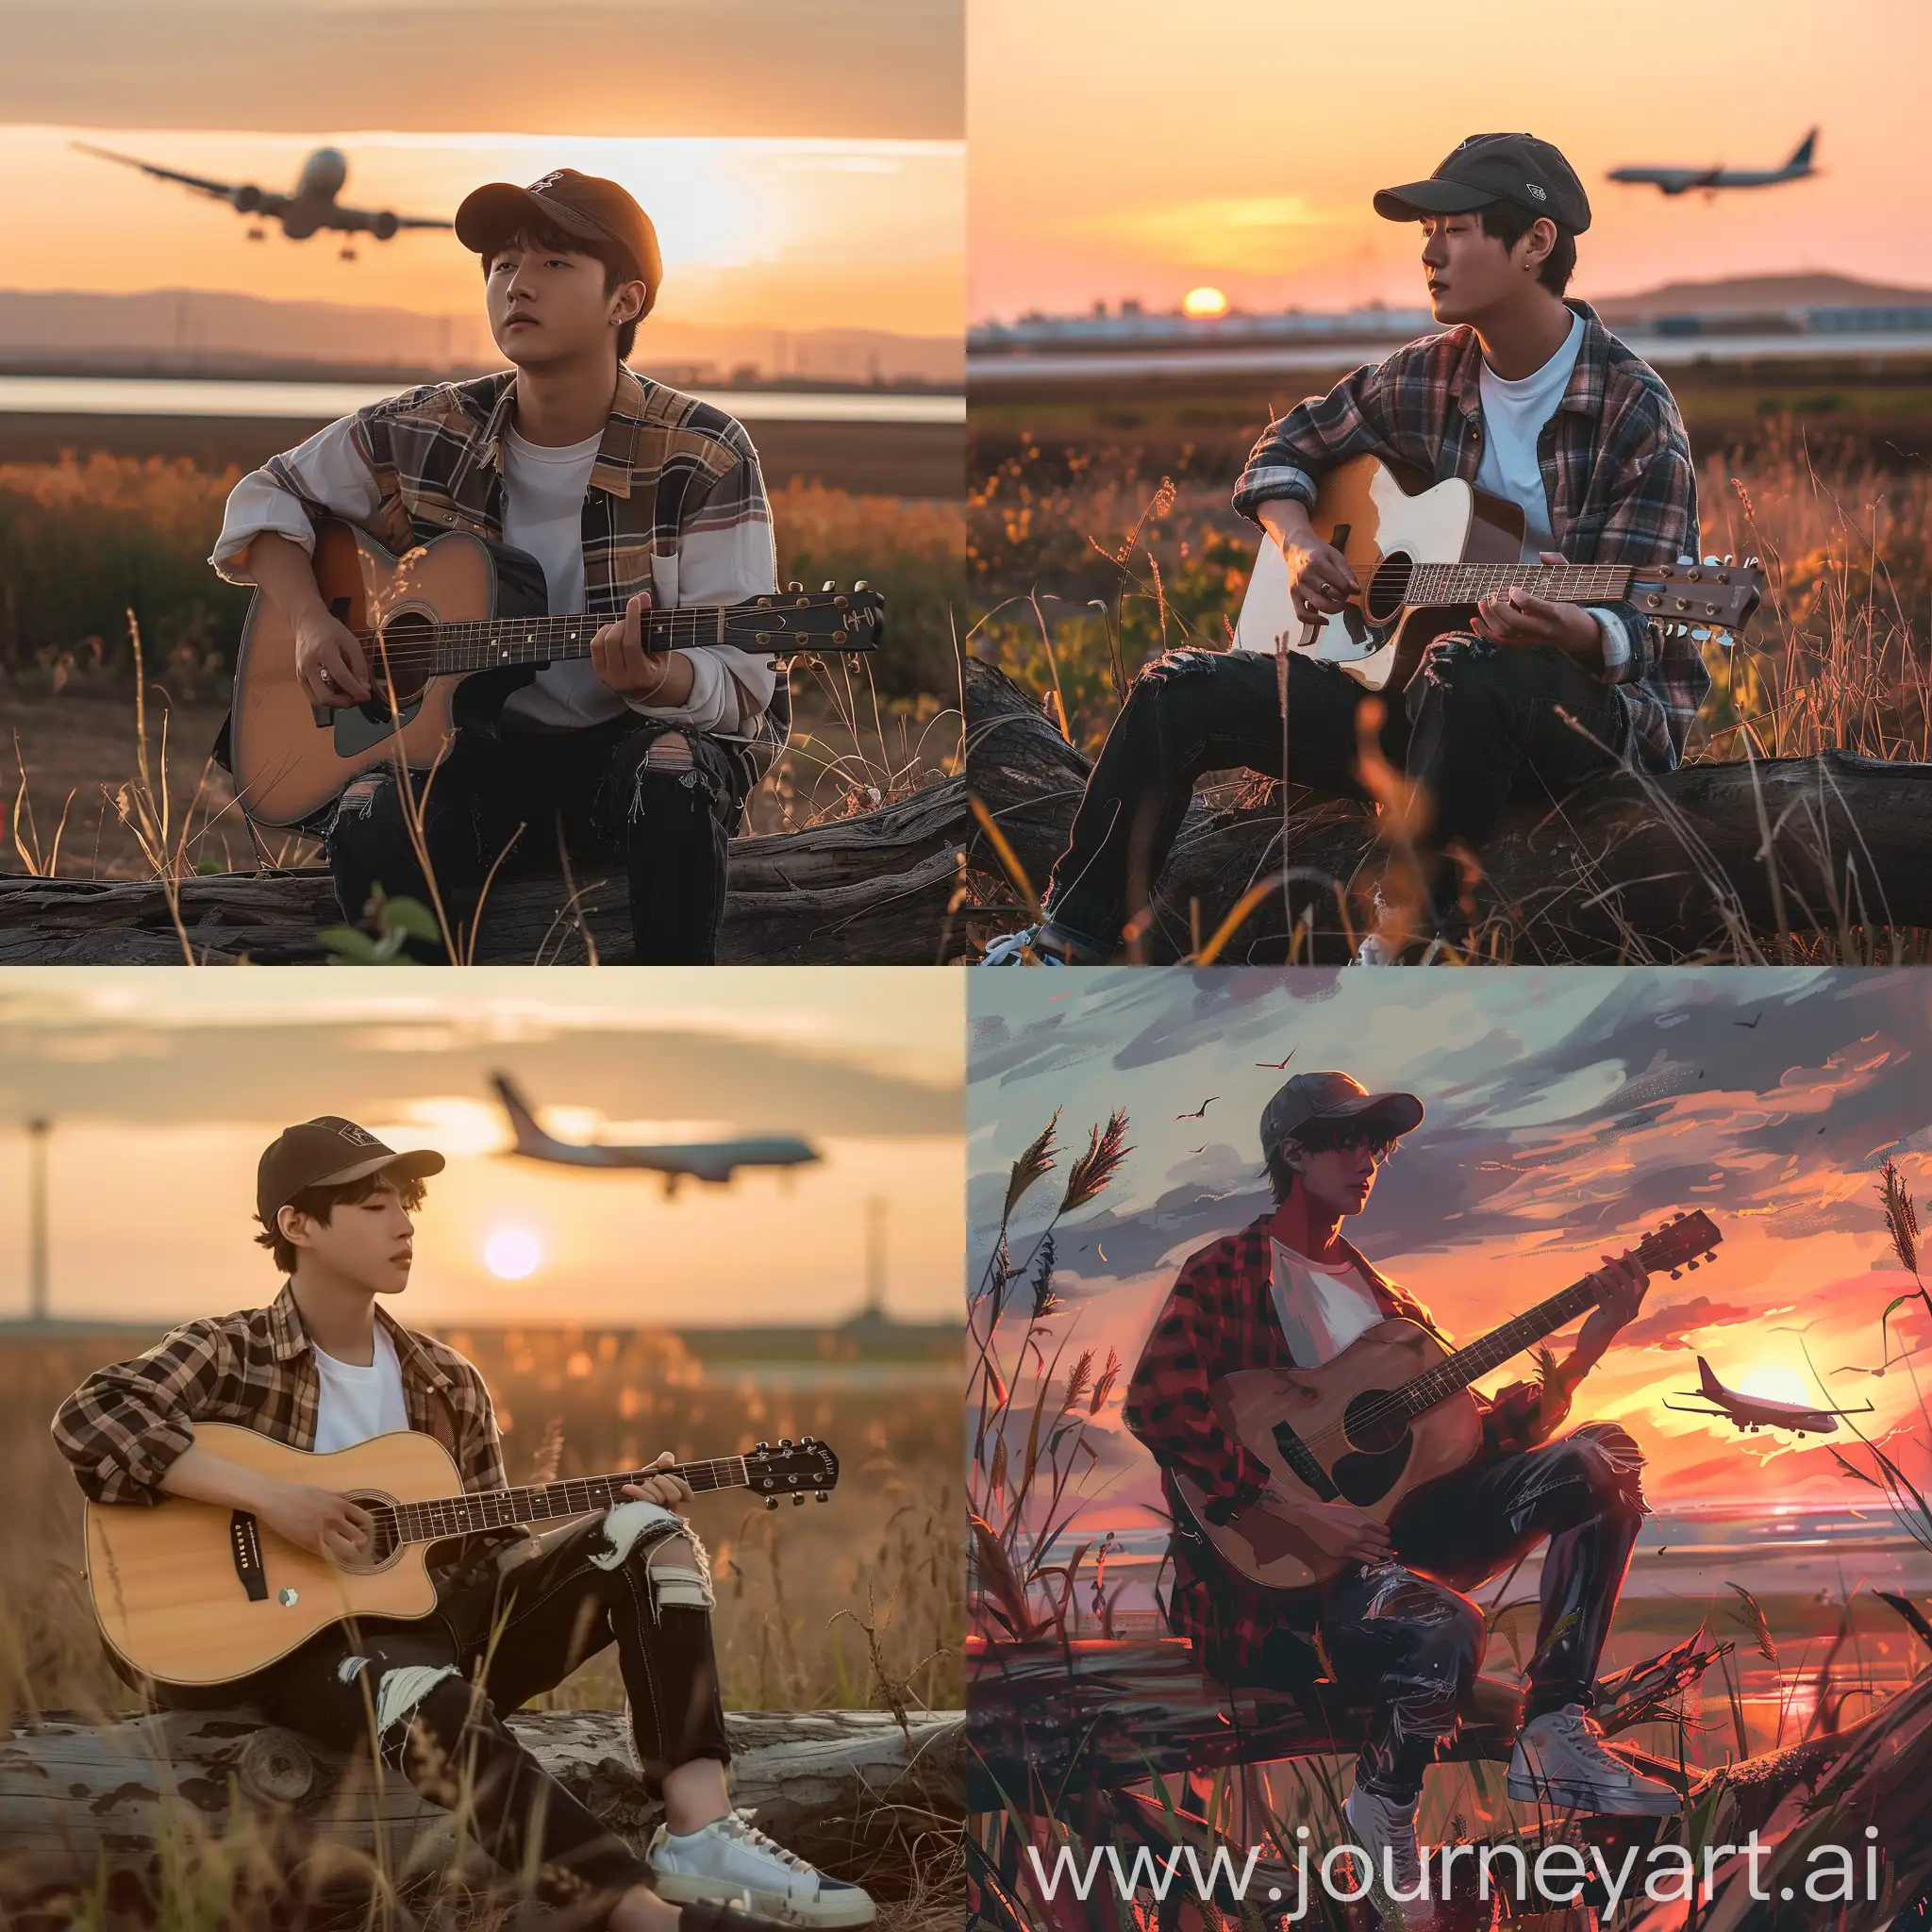 Young-Korean-Man-Playing-Acoustic-Guitar-at-Sunset